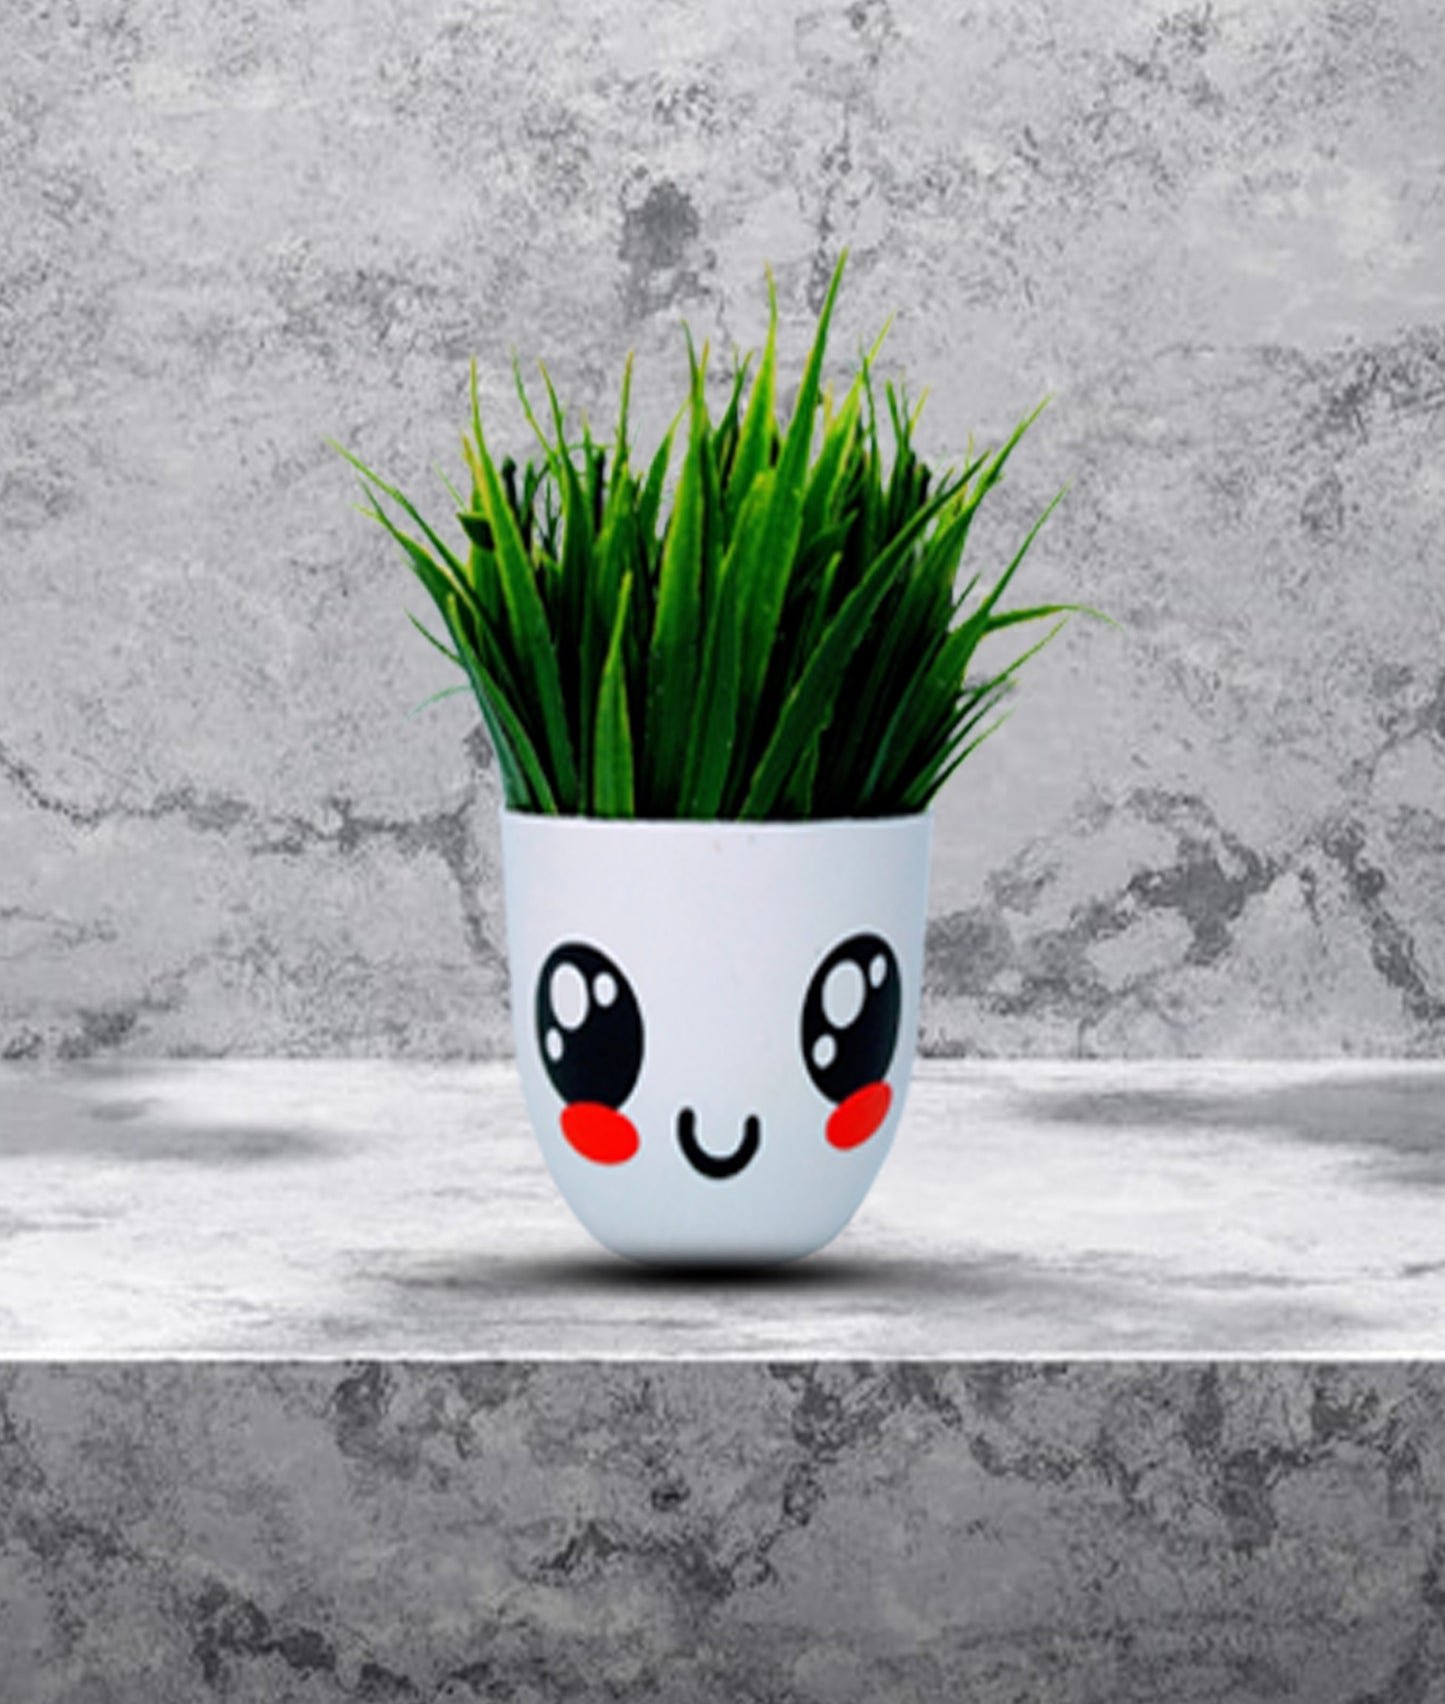 Rakakart- Artificial Plants with Cute Face,set of 4 emoji pots